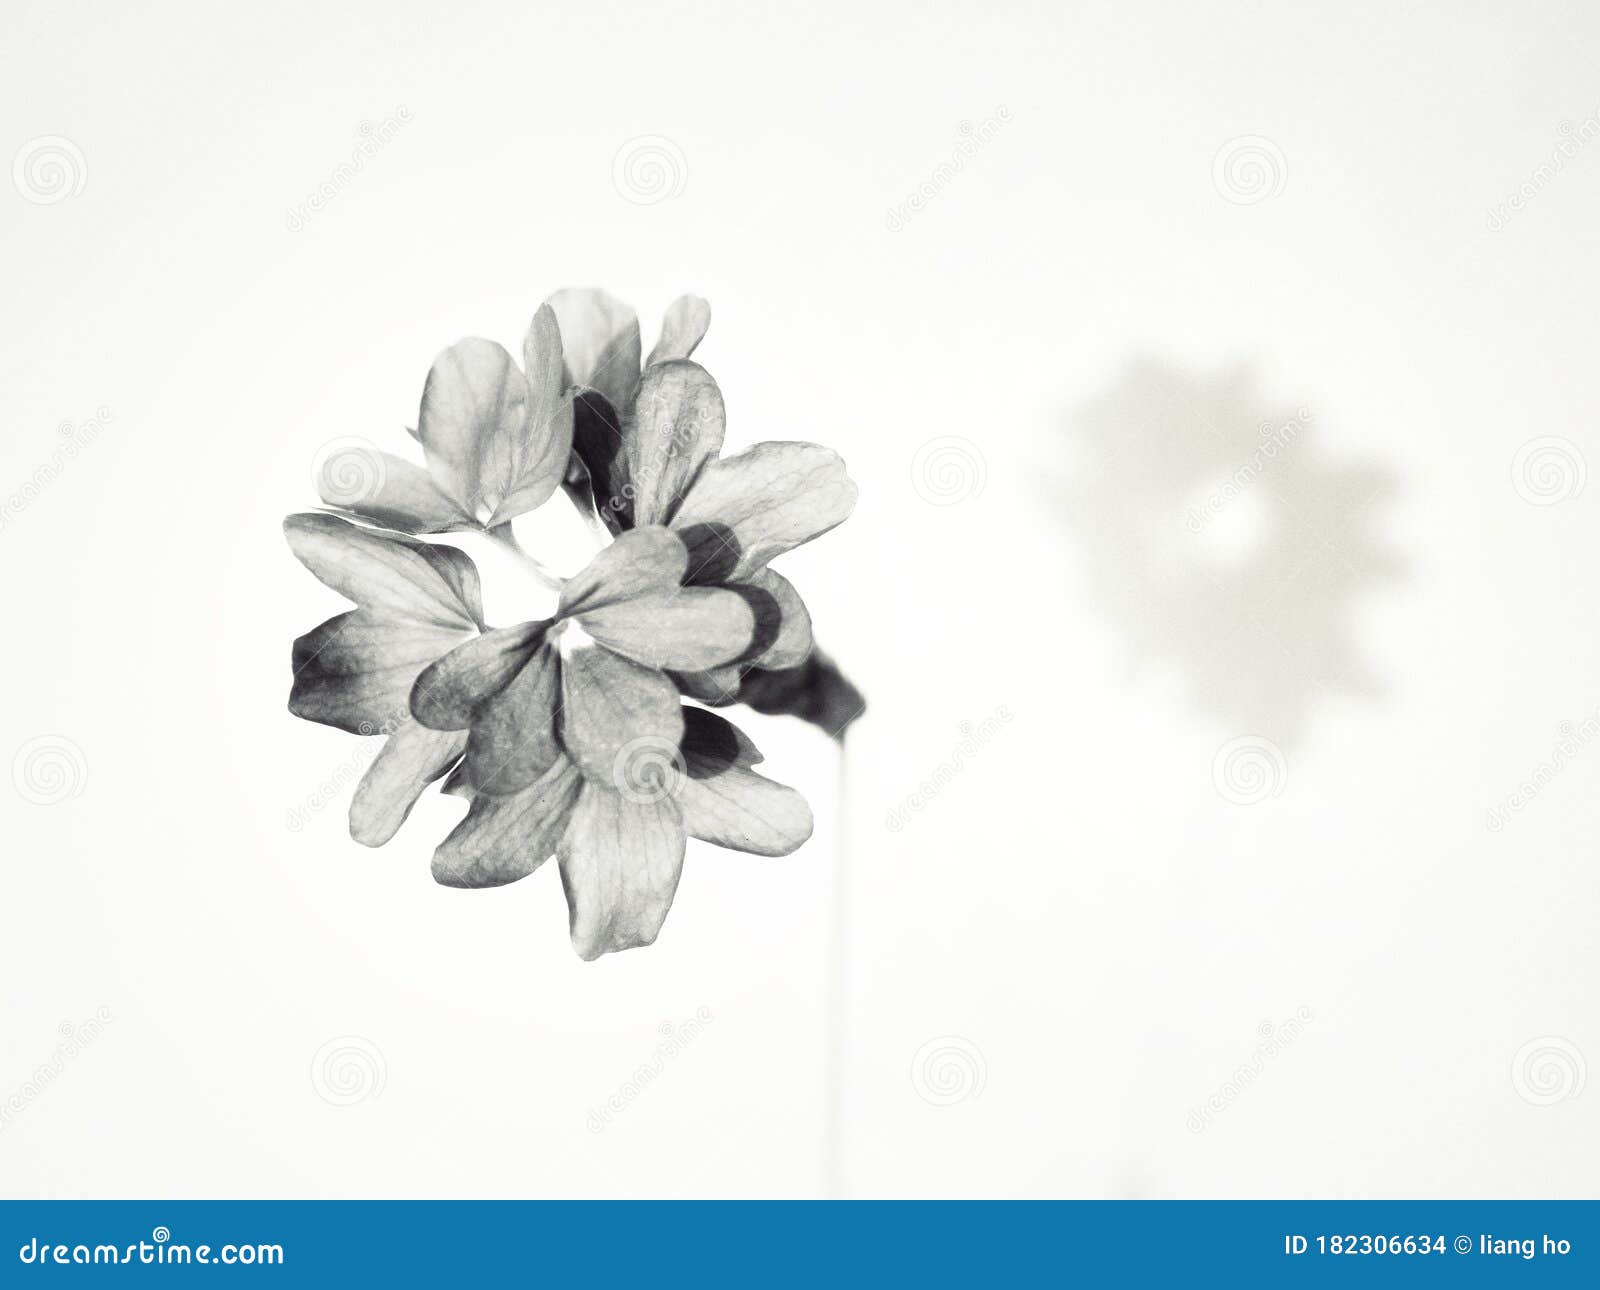 blackandwhite flower with shadow